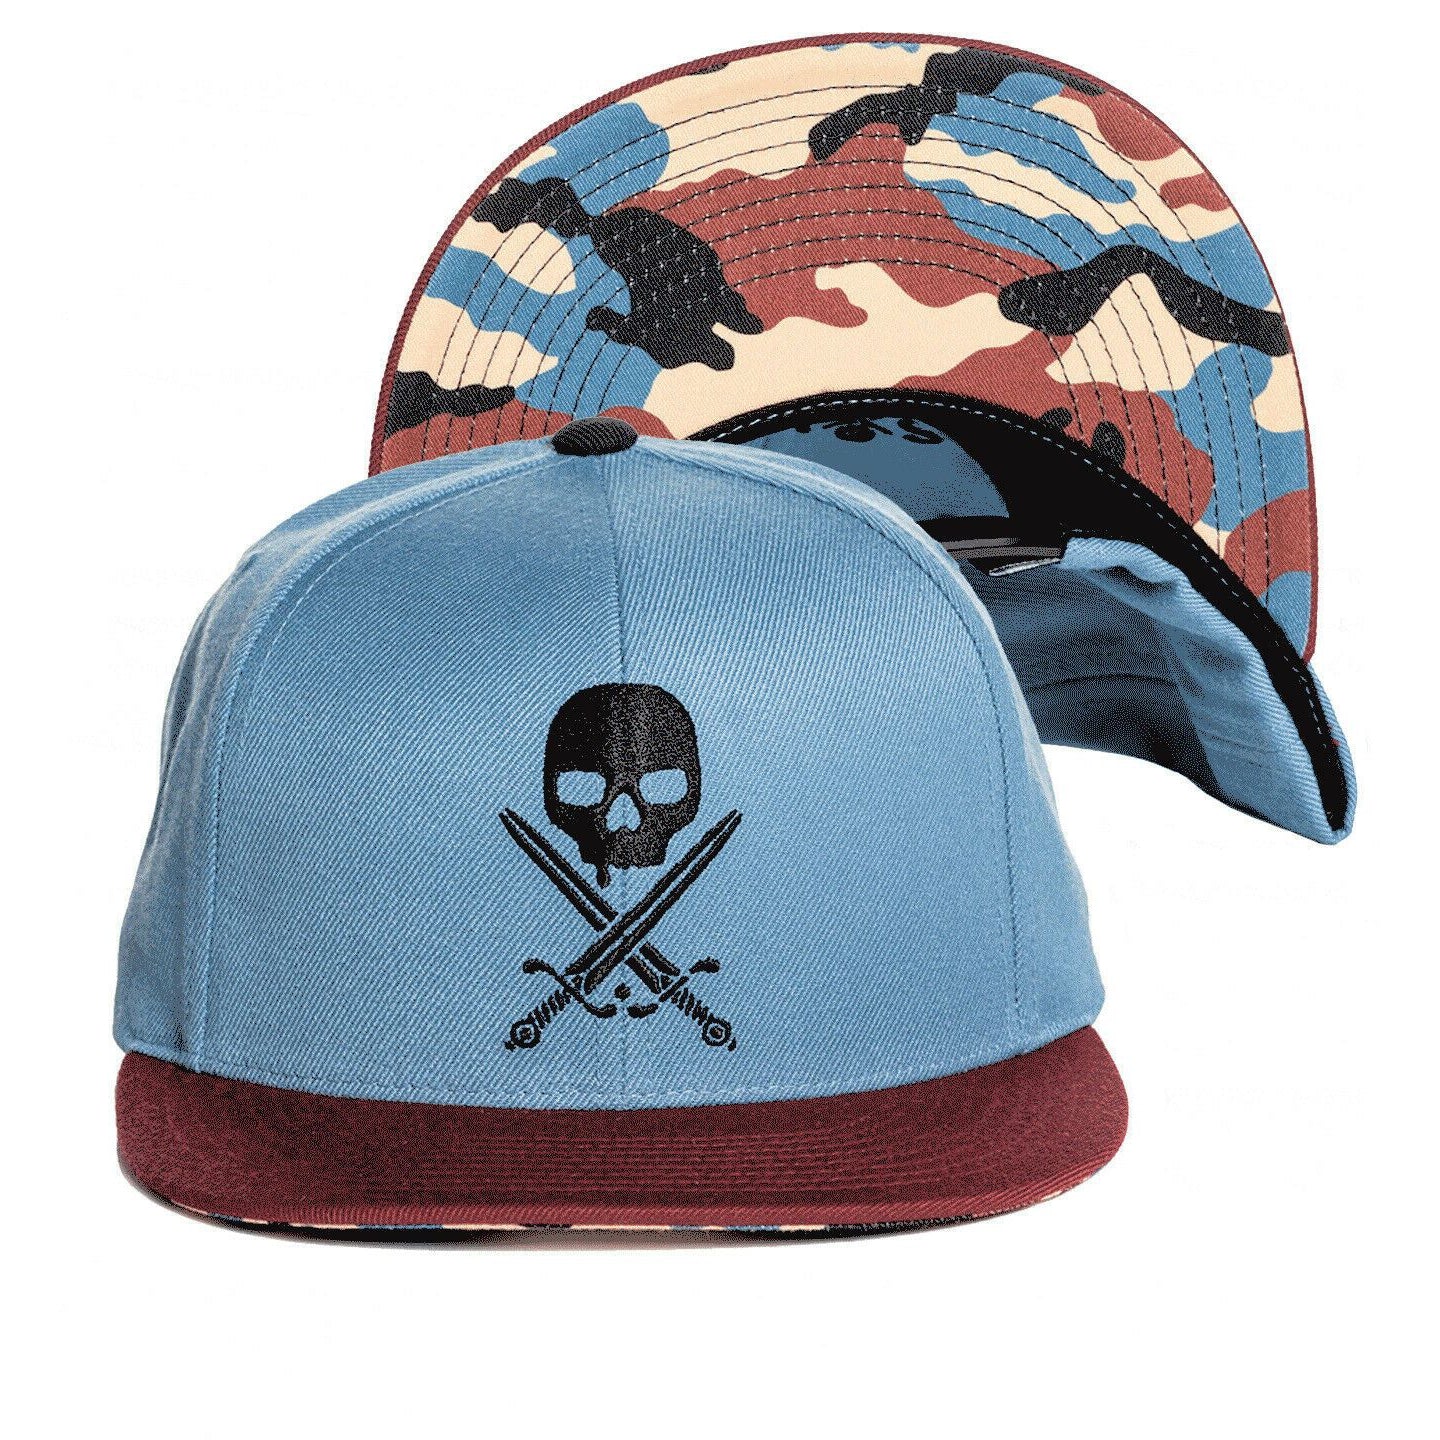 Urban Assault Blue Camouflage Snapback-Mens Beanies, Hats & Snapback Caps-Scarlett Dawn